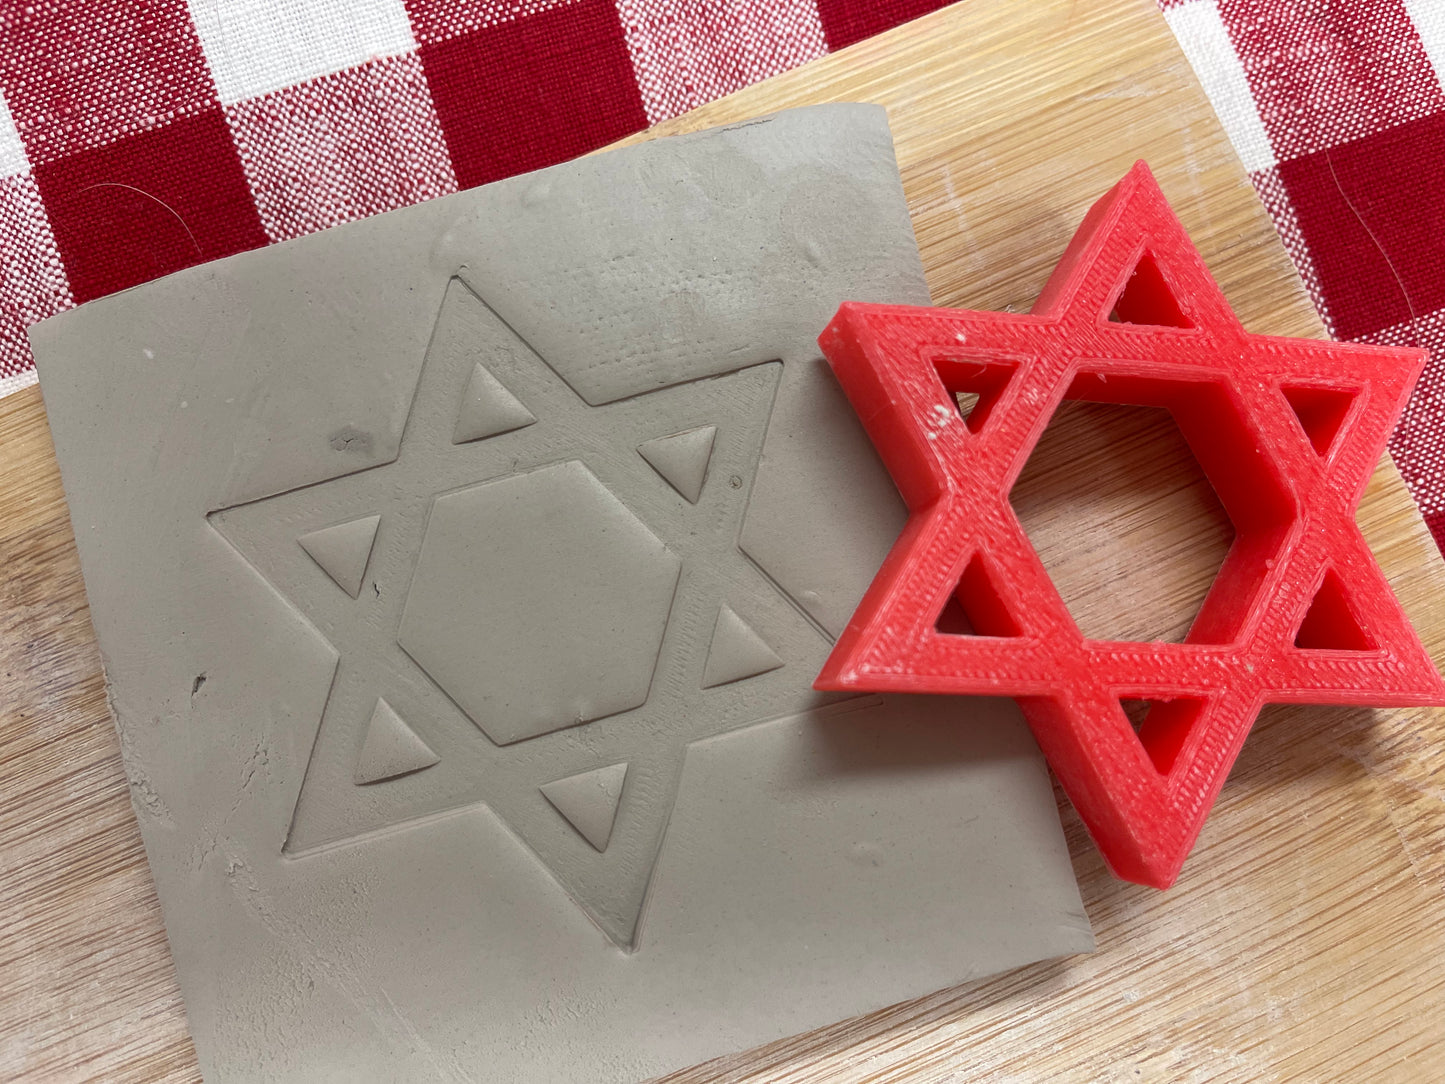 Pottery Stamp, Hanukkah Star of David design - multiple sizes